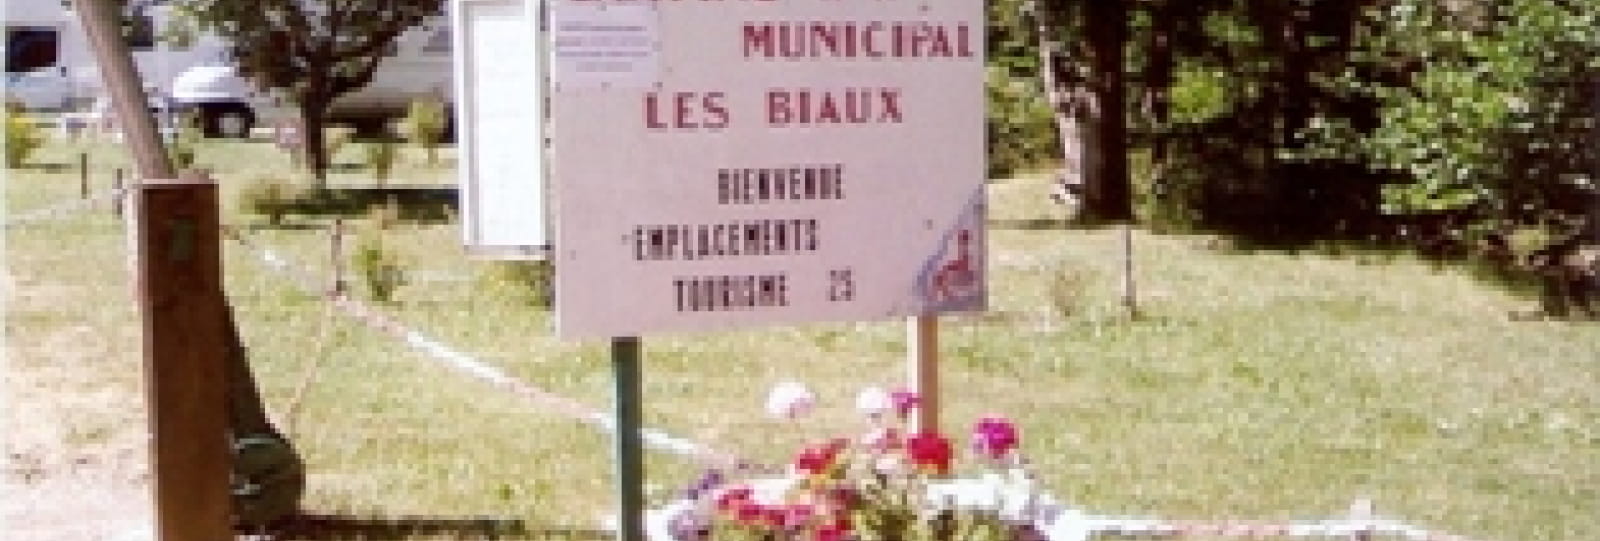 Camping municipal Les Biaux